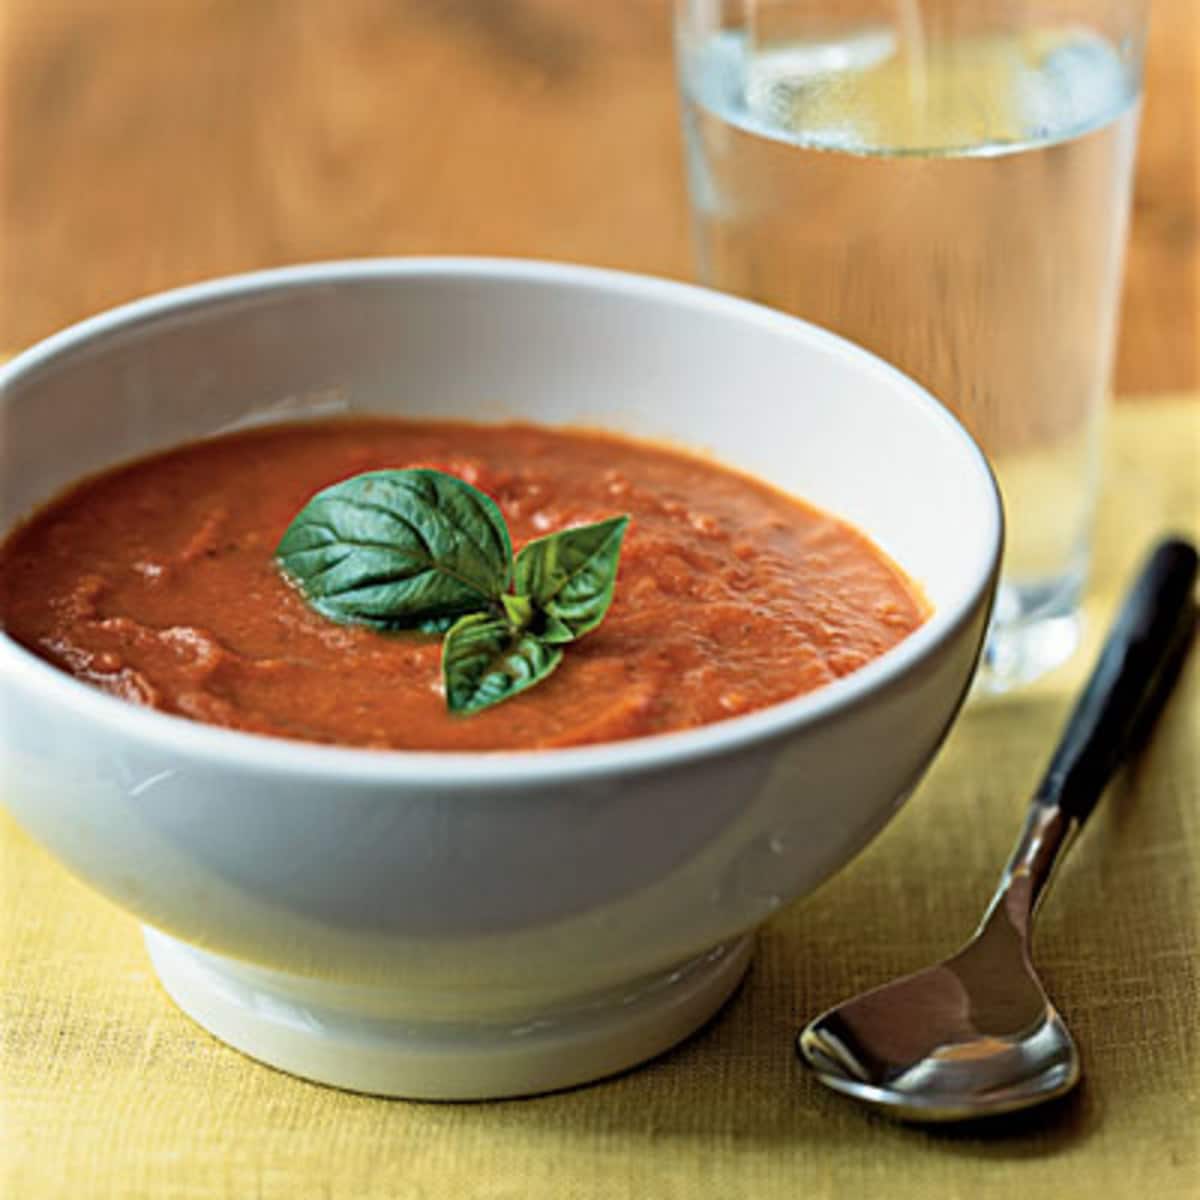 Applebeeâs Tomato Basil Soup Recipe from fresh tomatoes.